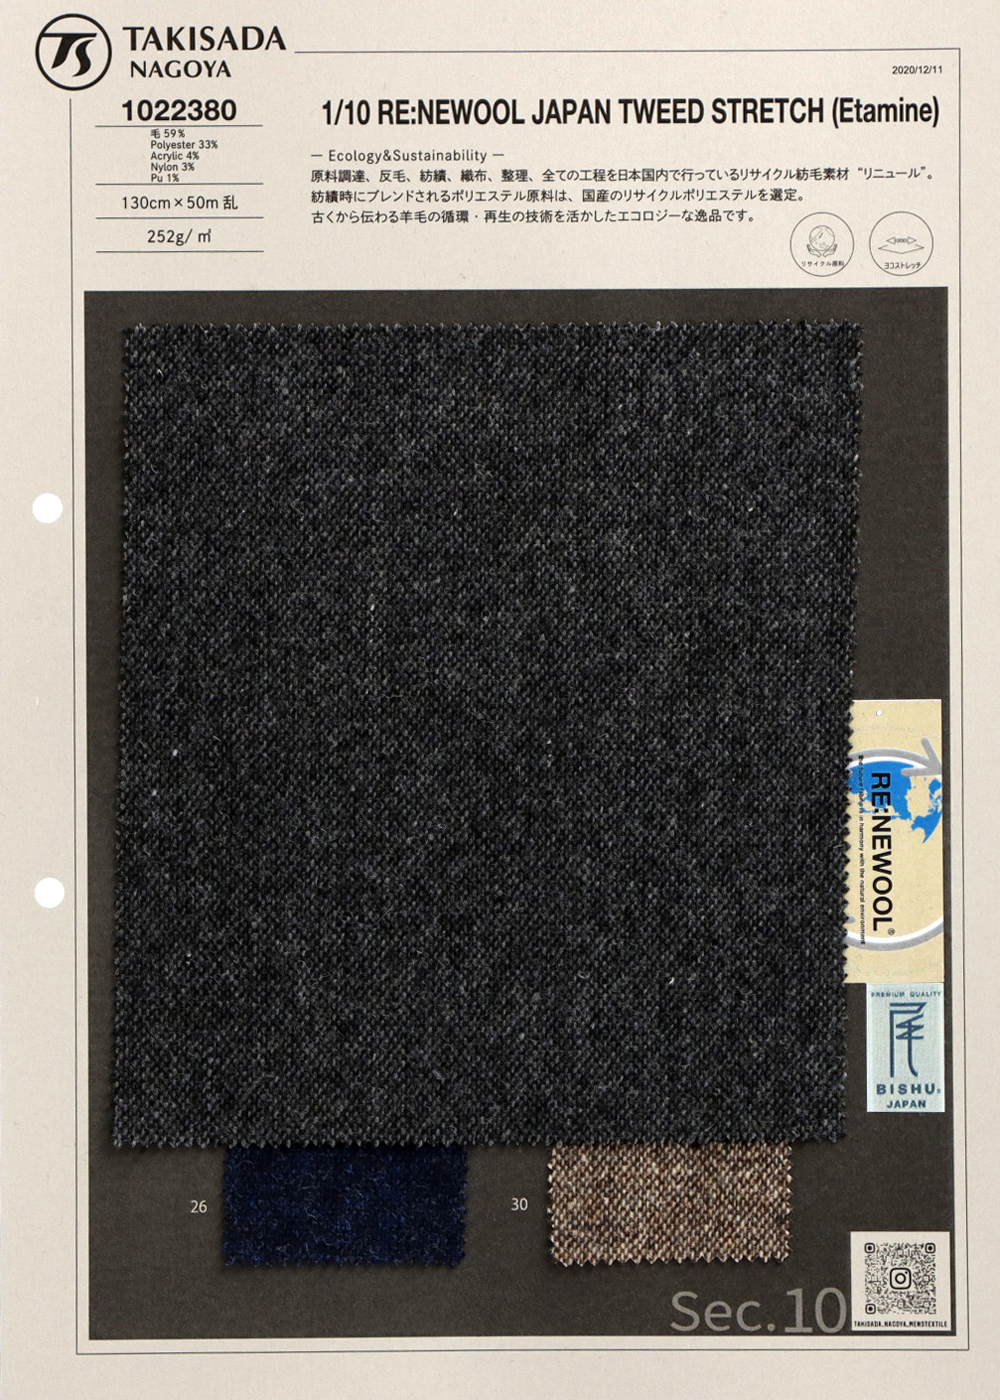 1022380 1/10 RE:NEWOOL® Stretch Heimgesponnen[Textilgewebe] Takisada Nagoya